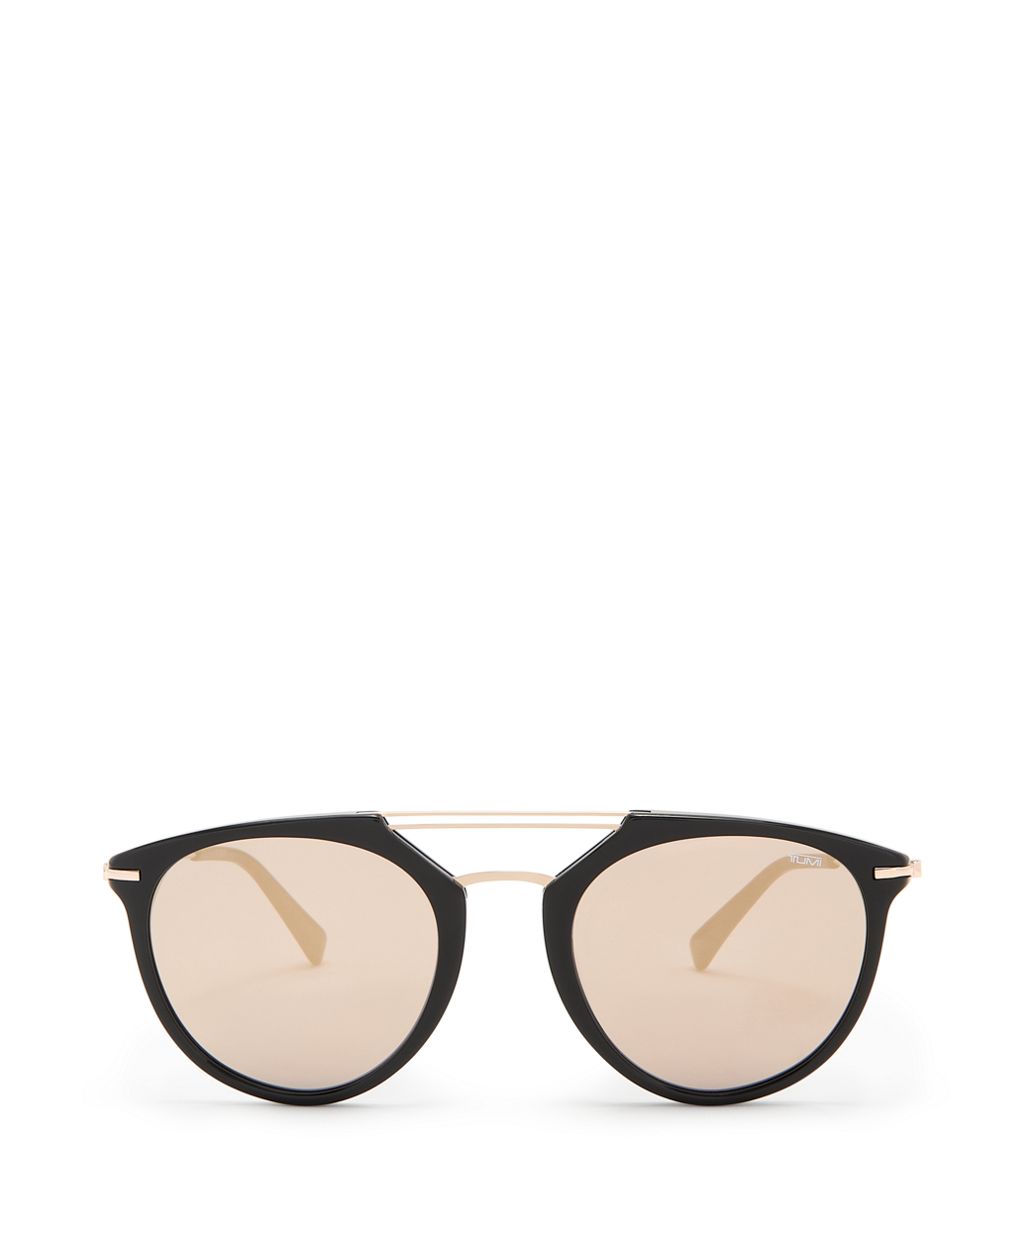 TUMI 503 Round Sunglasses, 53mm | Tumi US